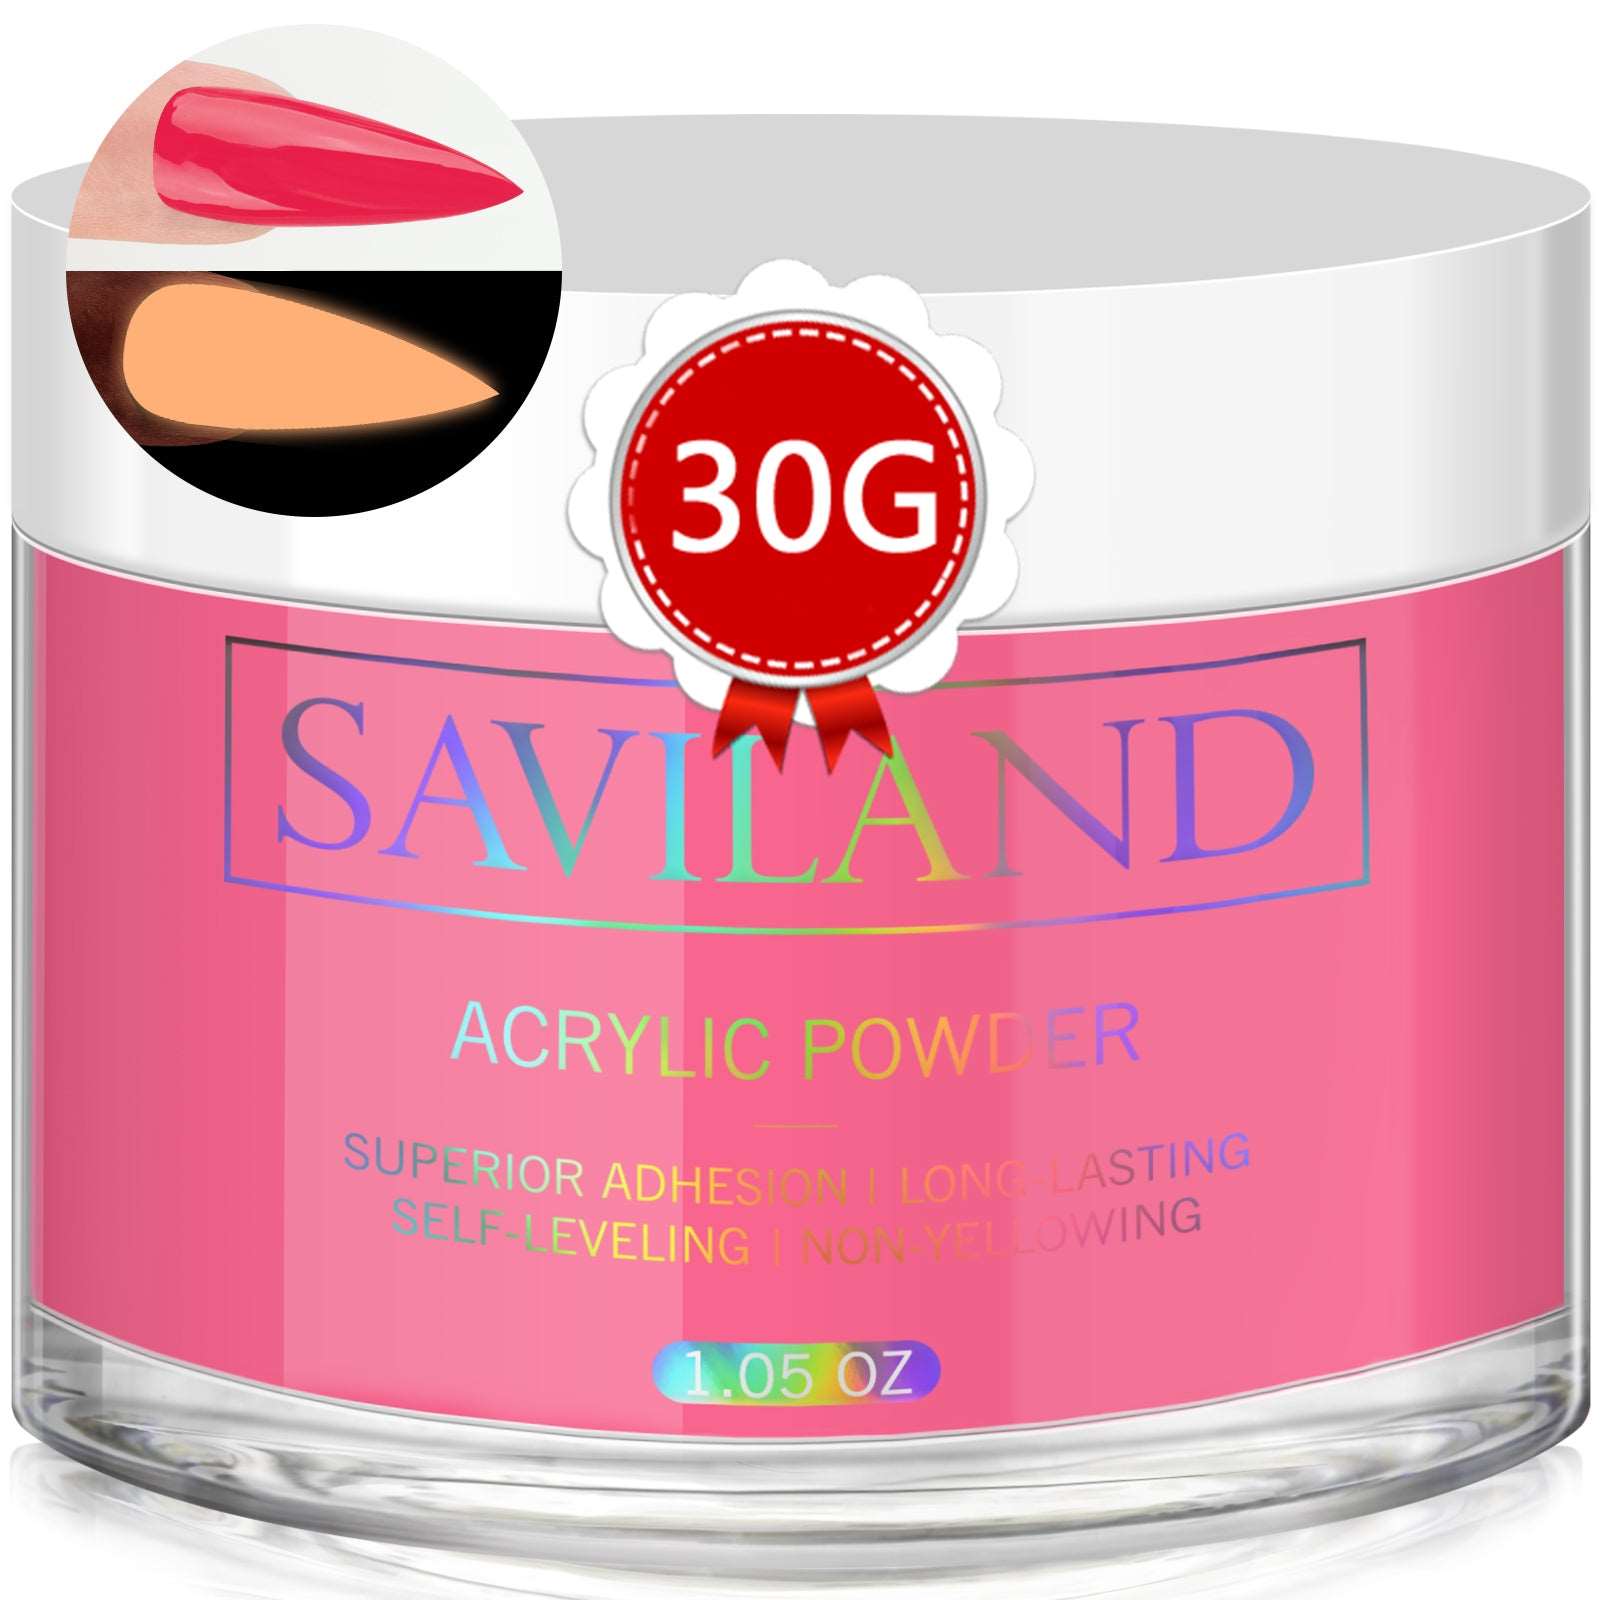 Saviland Acrylic Powder - Glow in The Dark Acrylic Powder 10 Colors NA